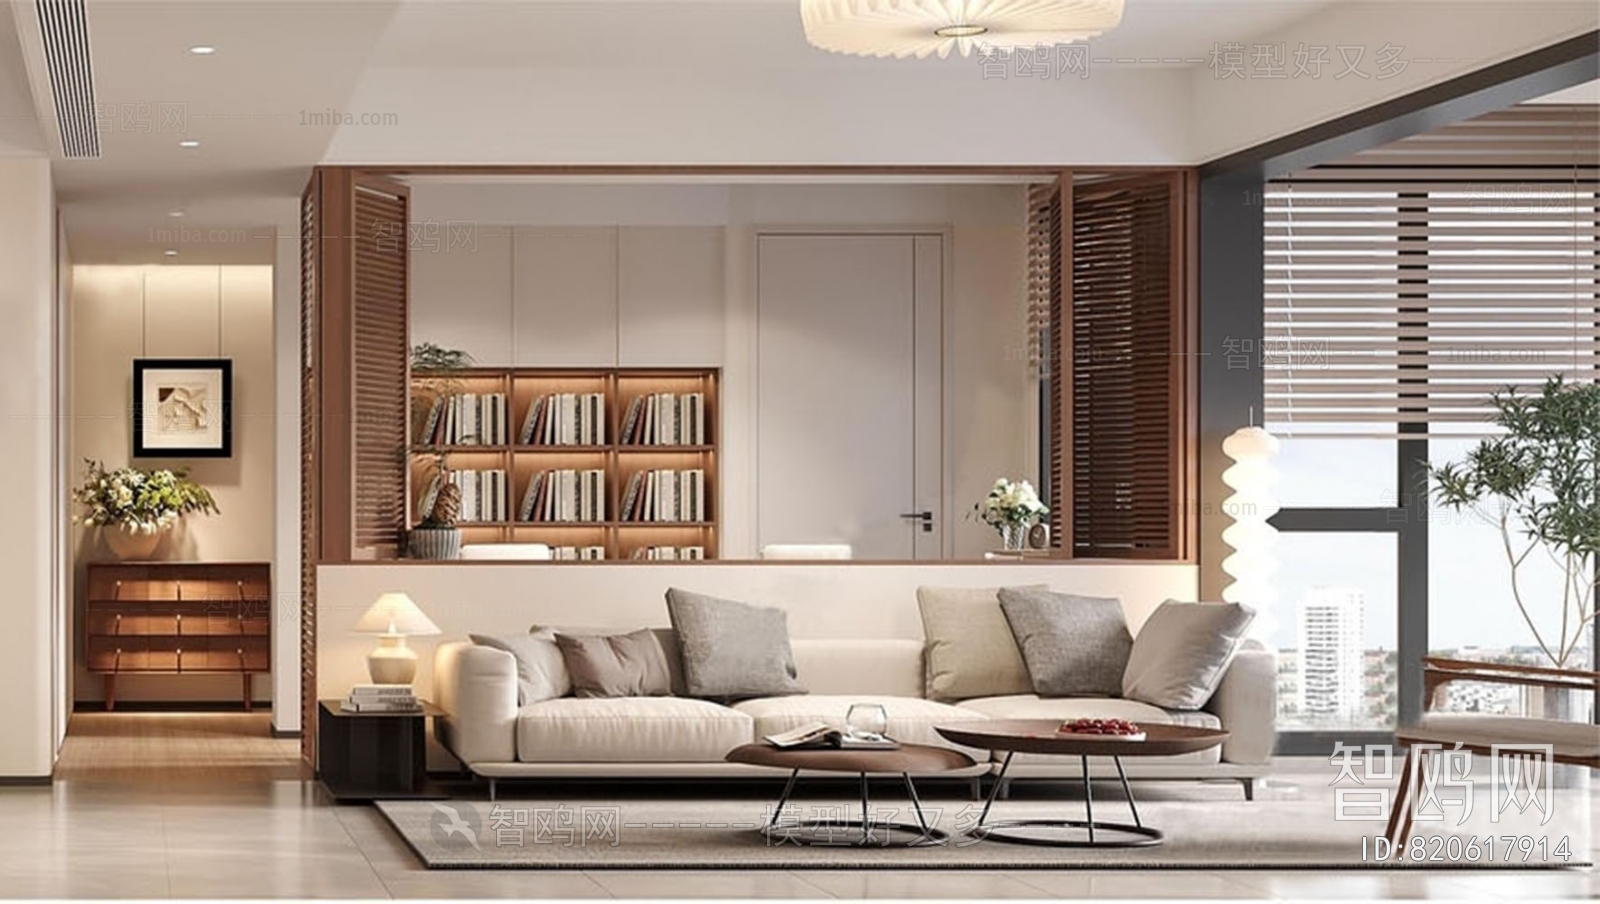 Modern Retro Style A Living Room